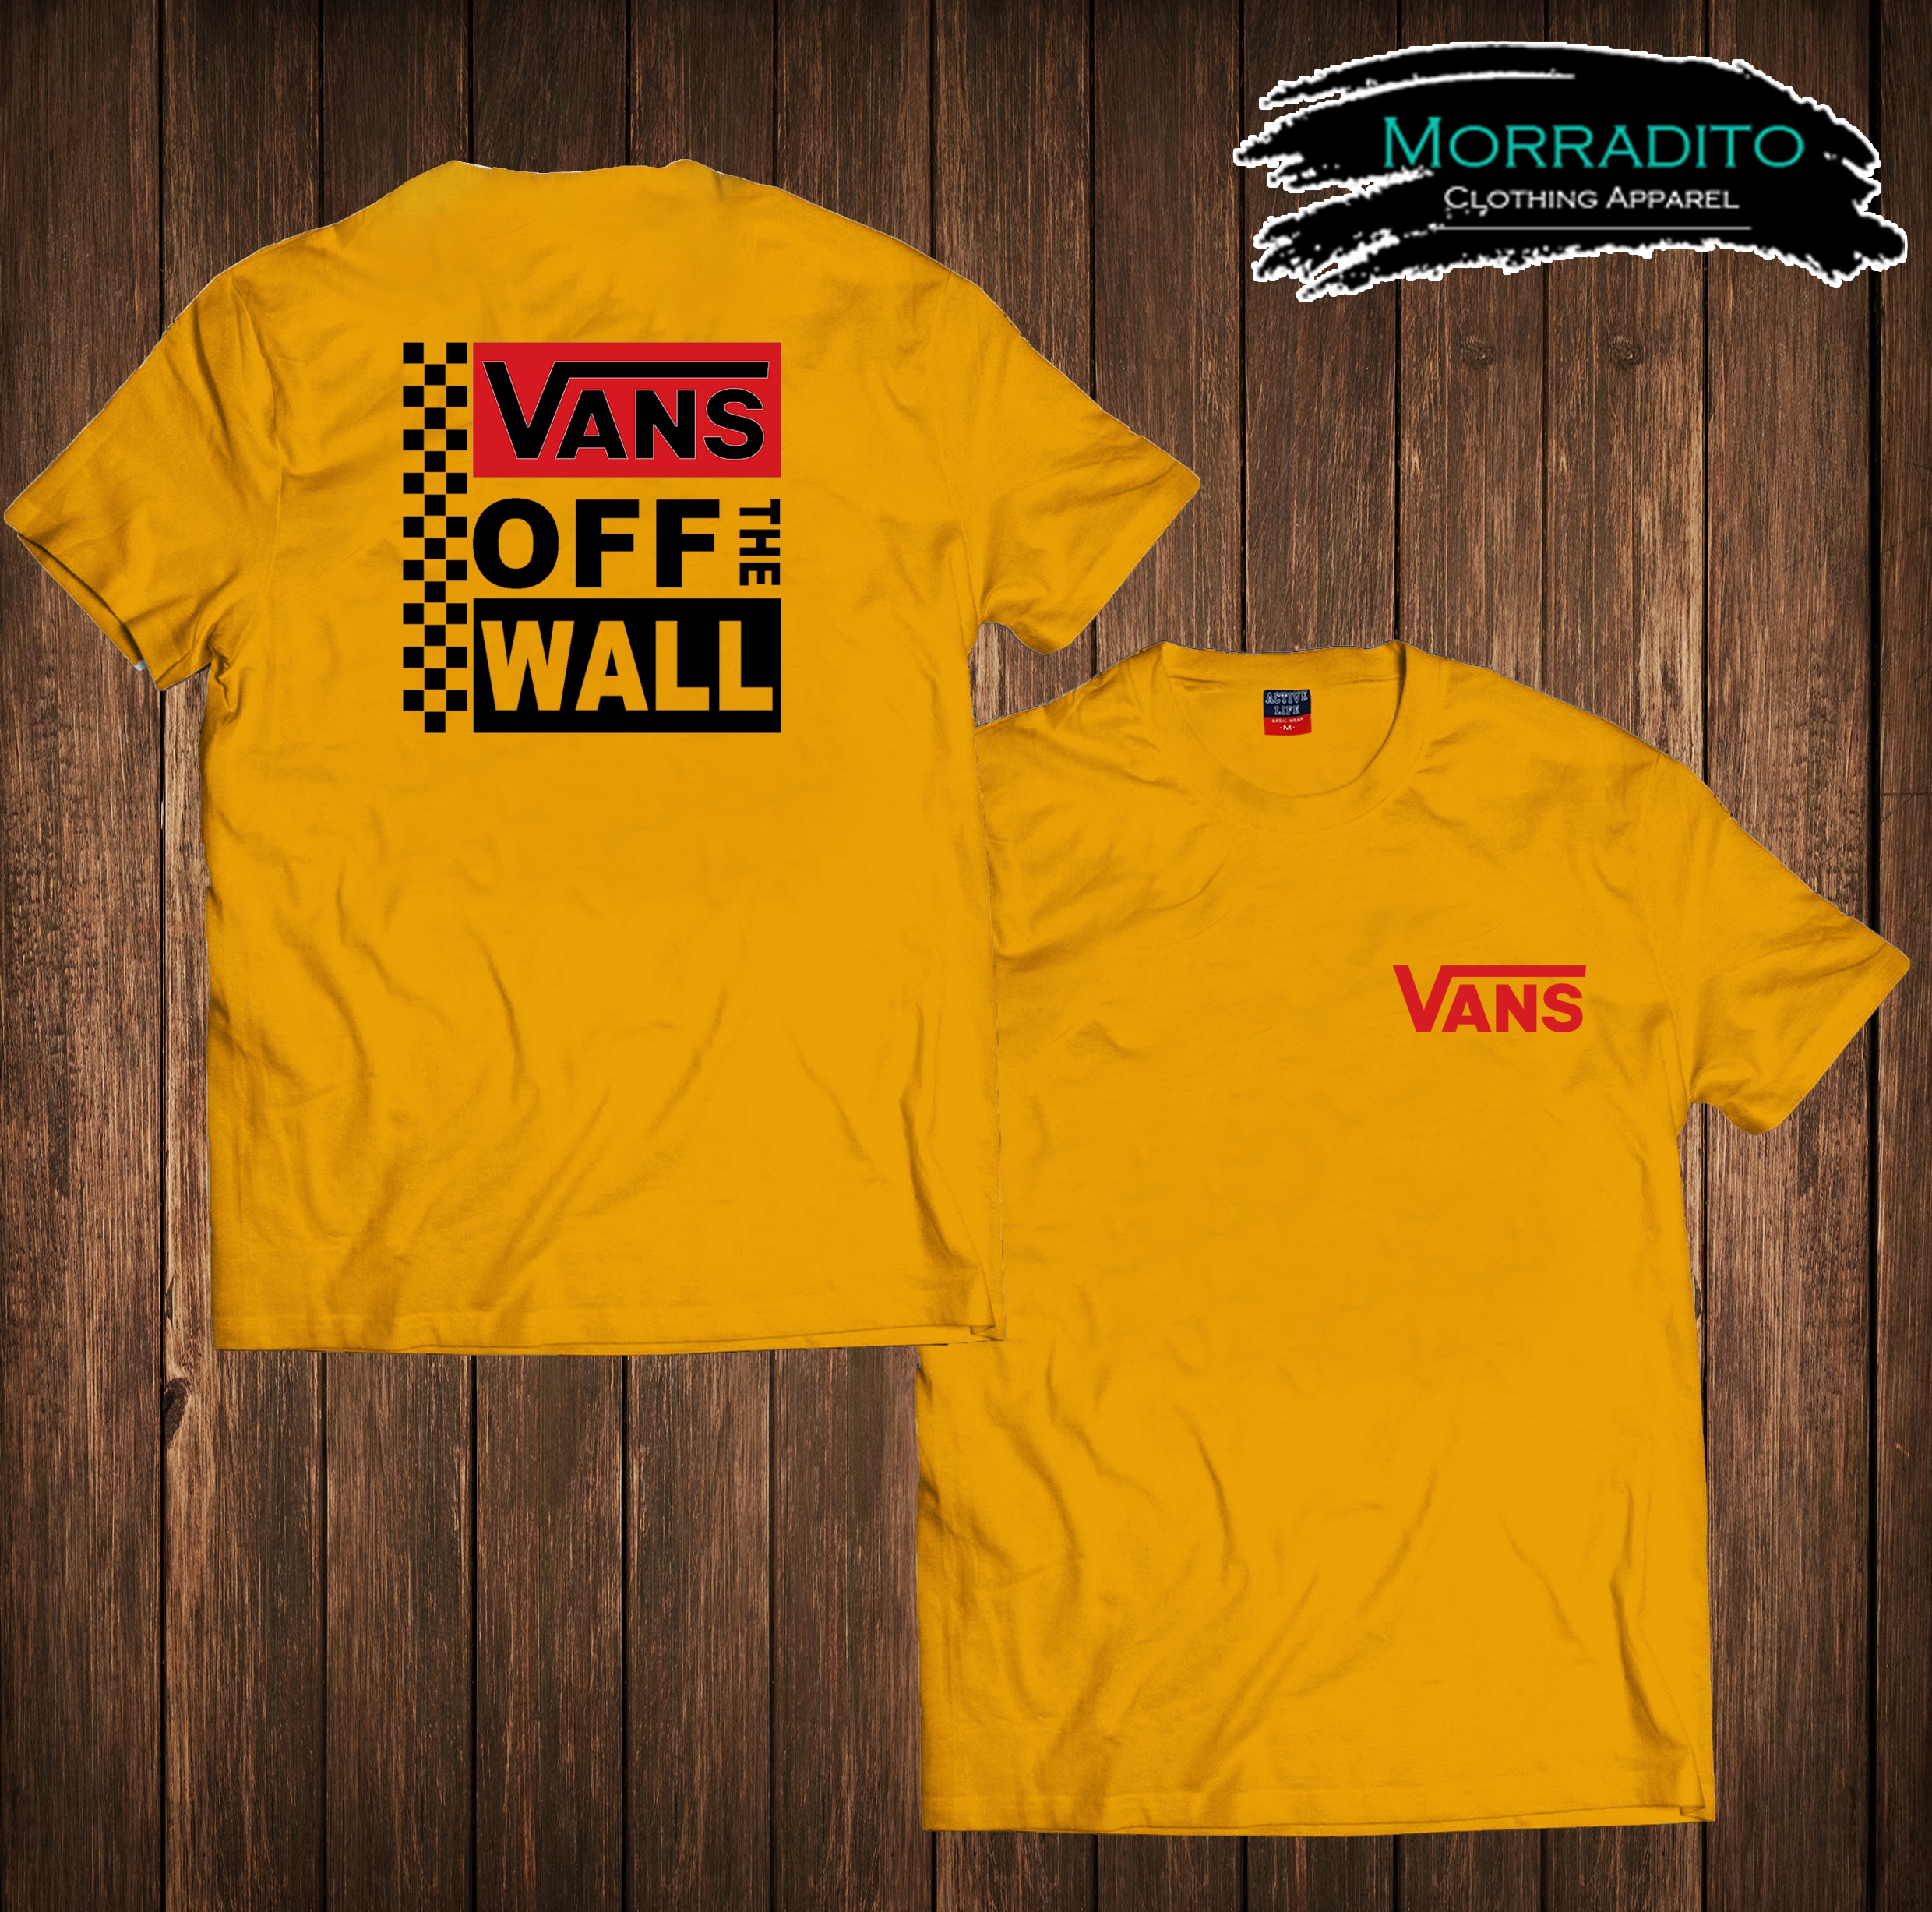 vans off the wall shirts